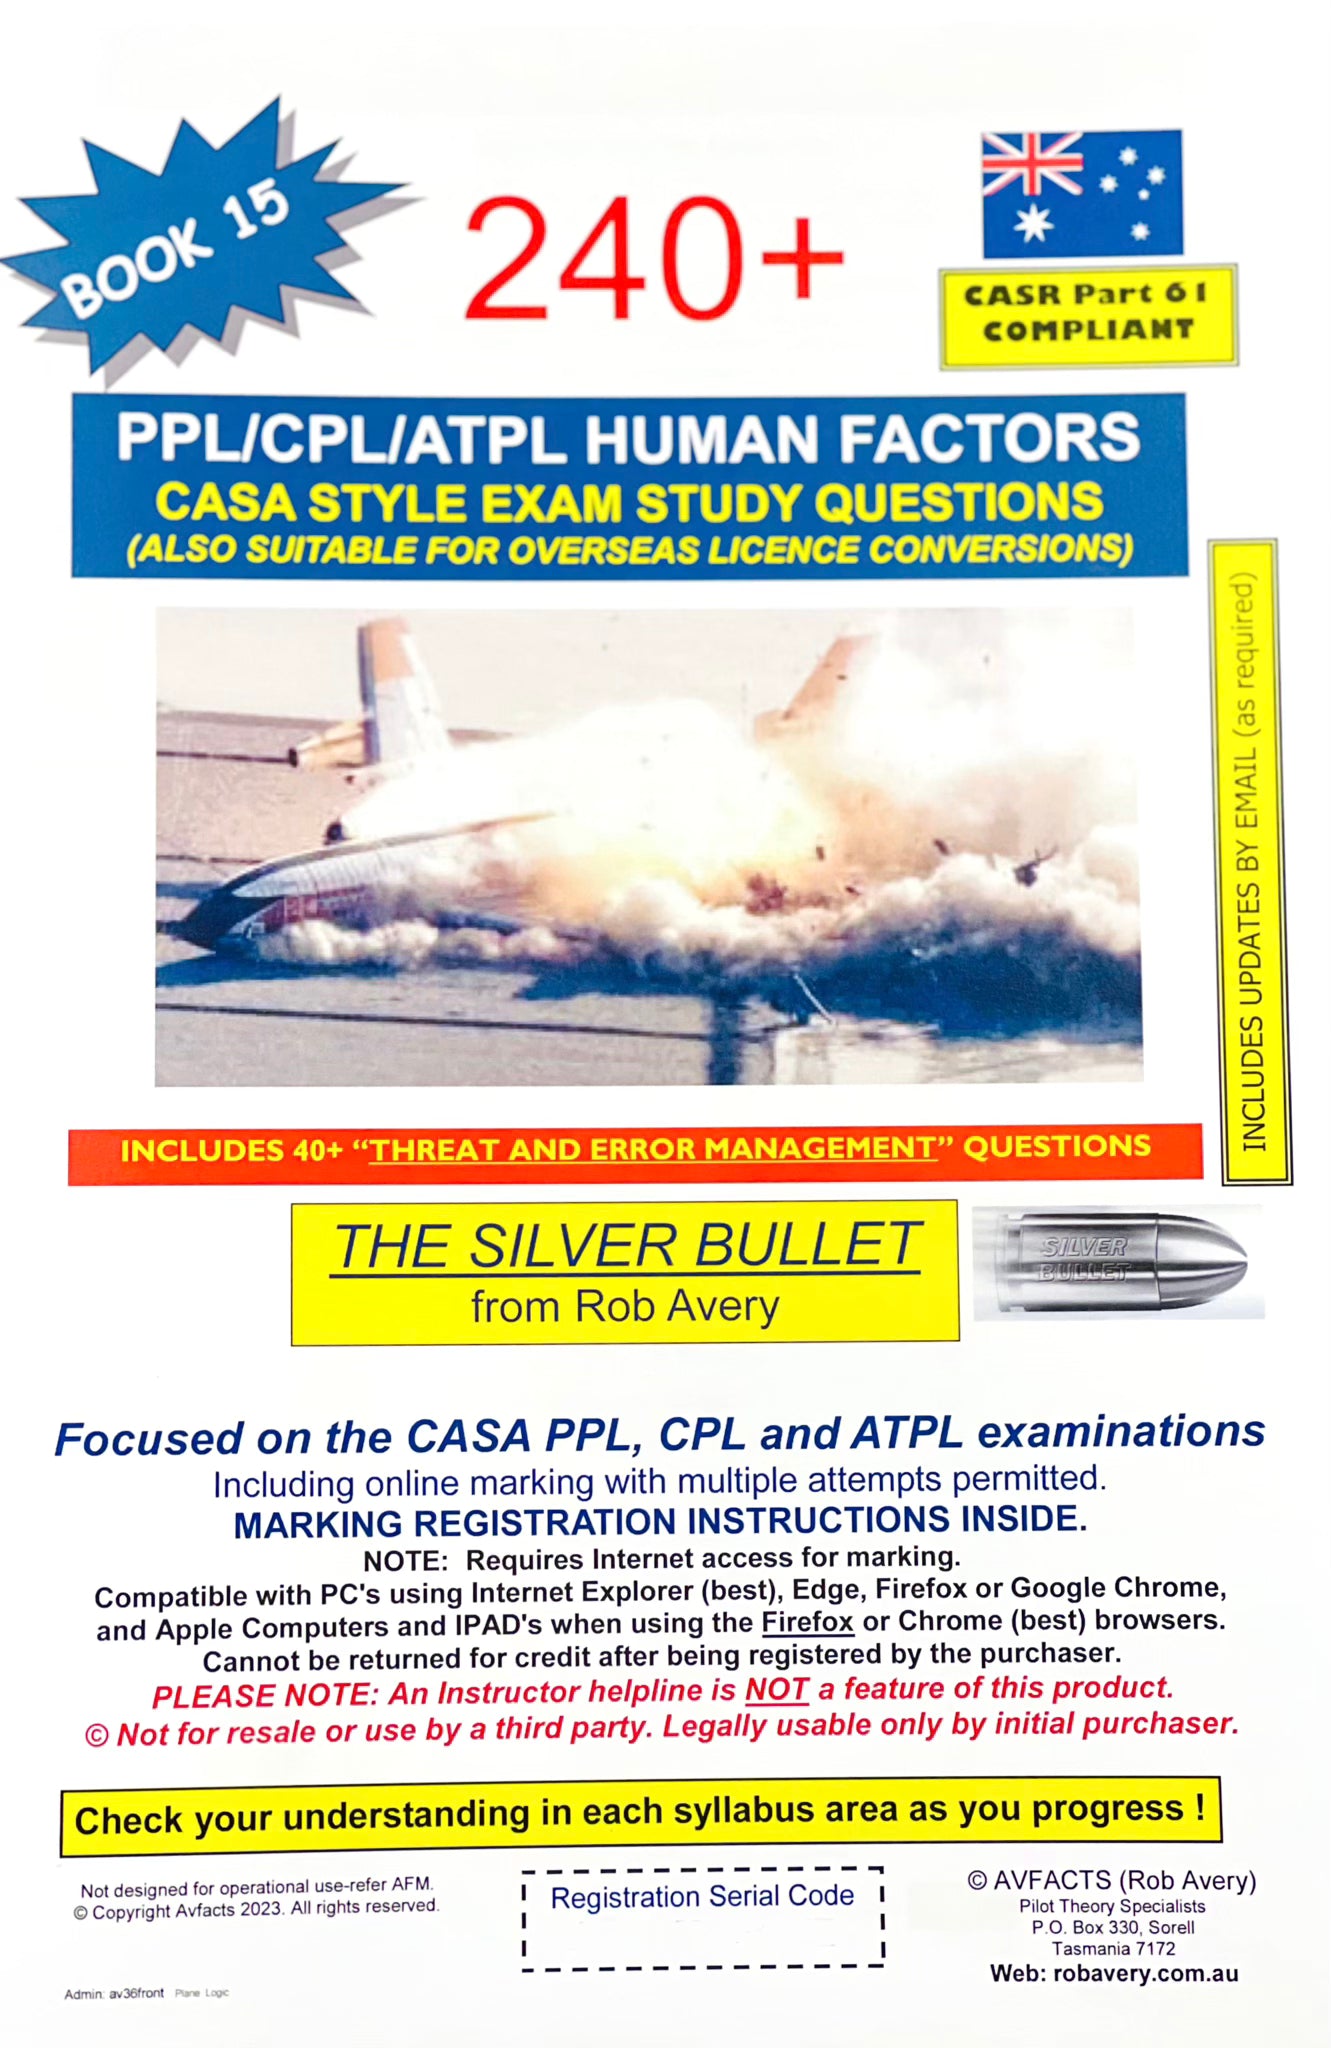 Avfacts by Rob Avery PPL/CPL/ATPL Human Factors 240+ Questions AV36